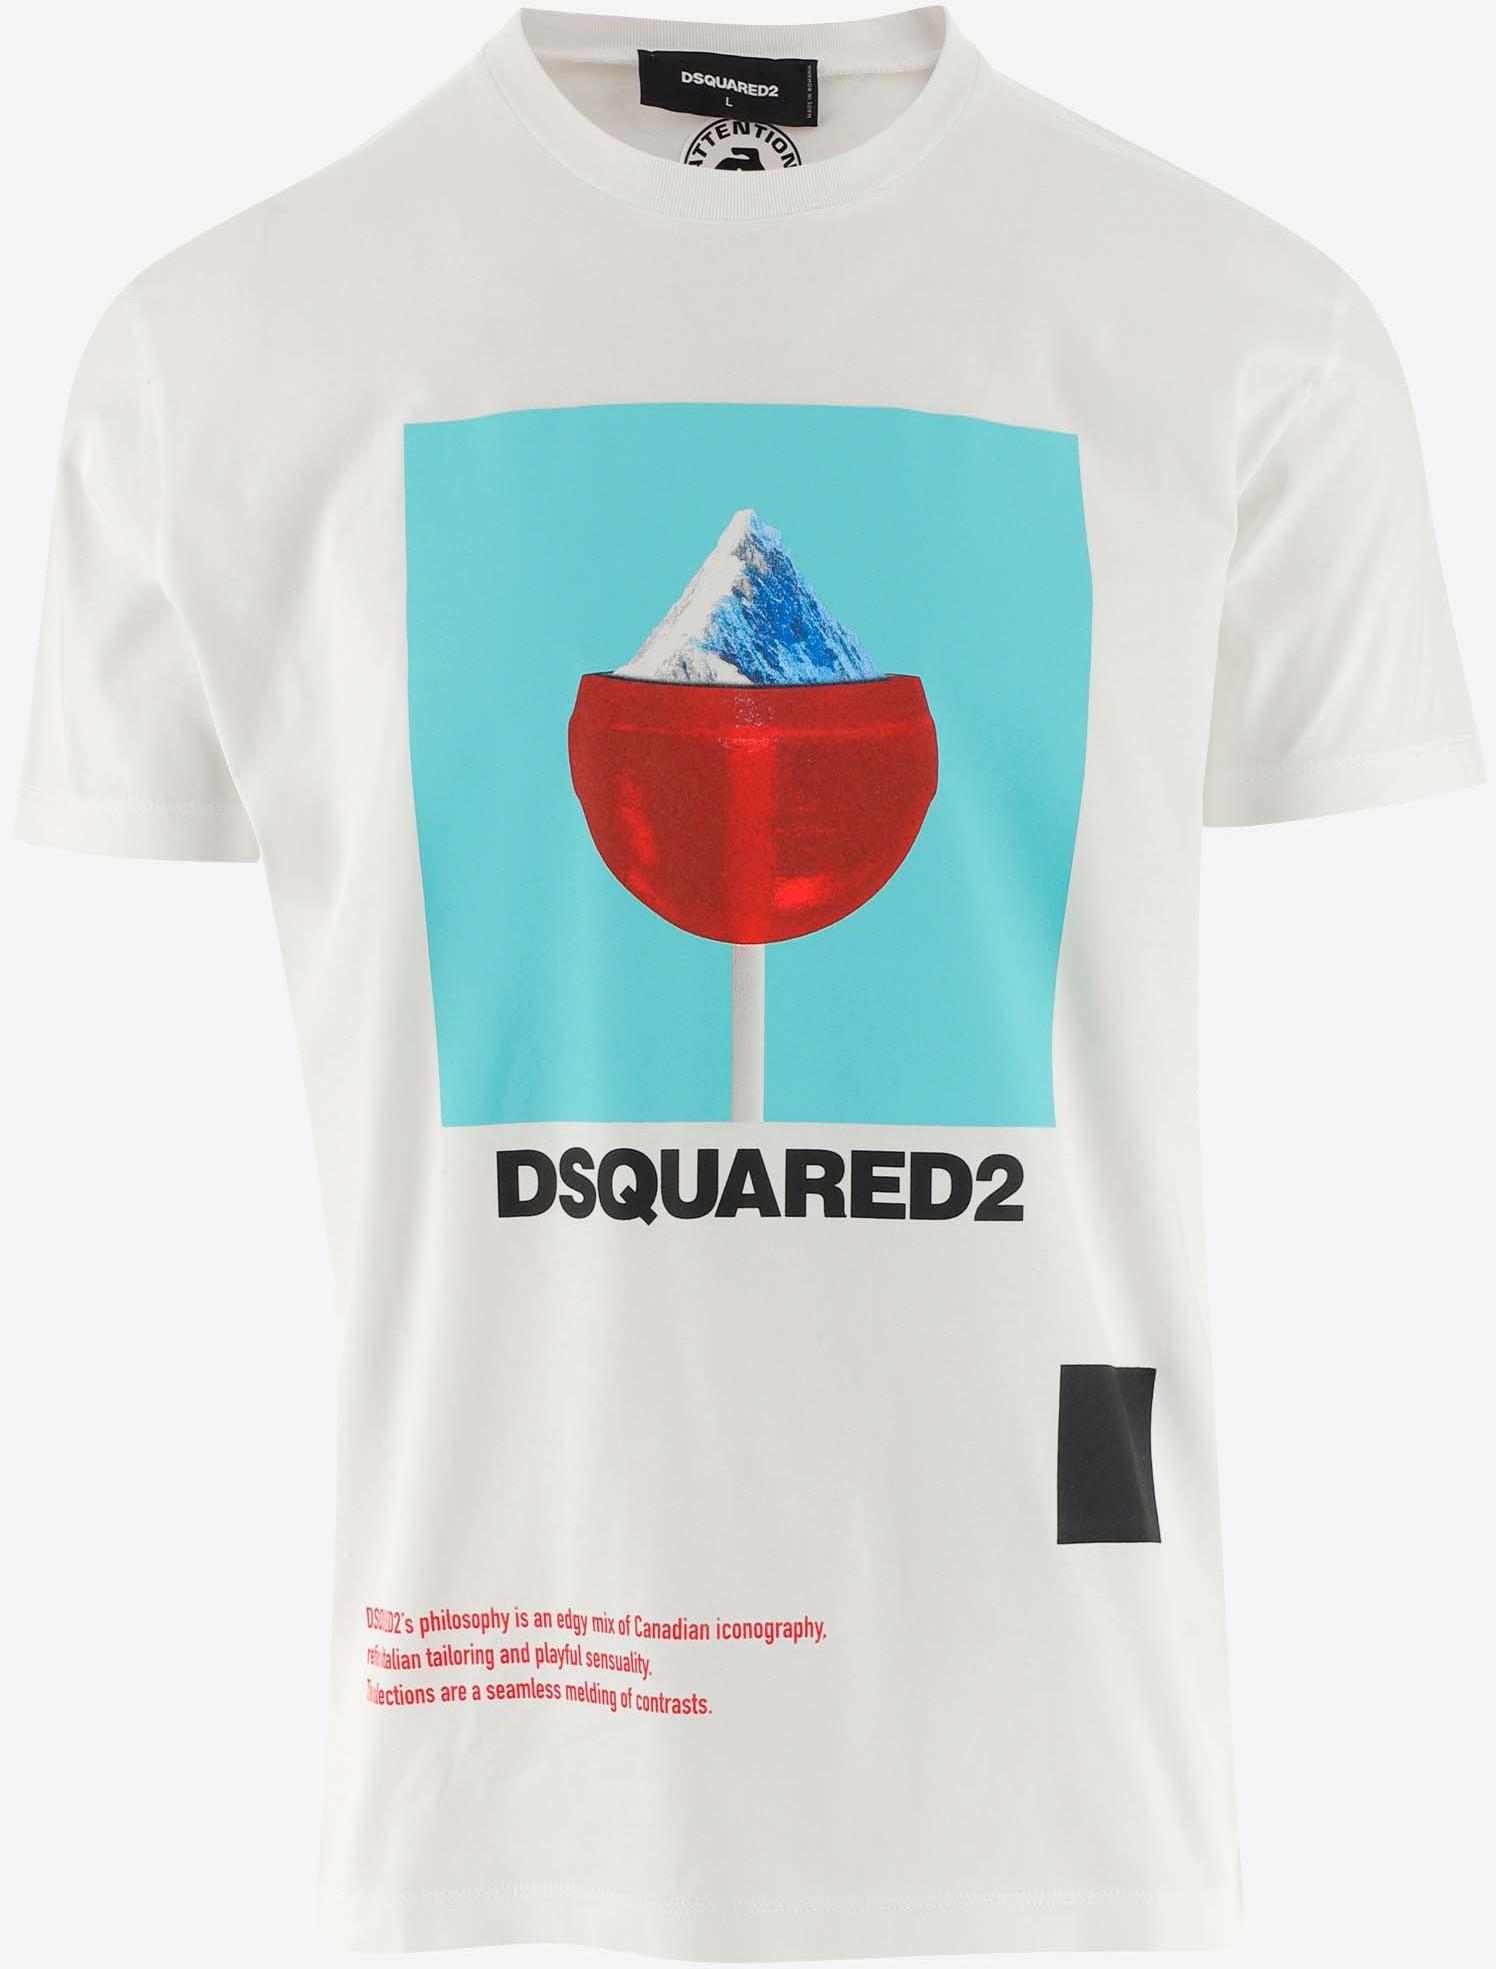 DSquared2 Men's T-Shirt L at FORZIERI